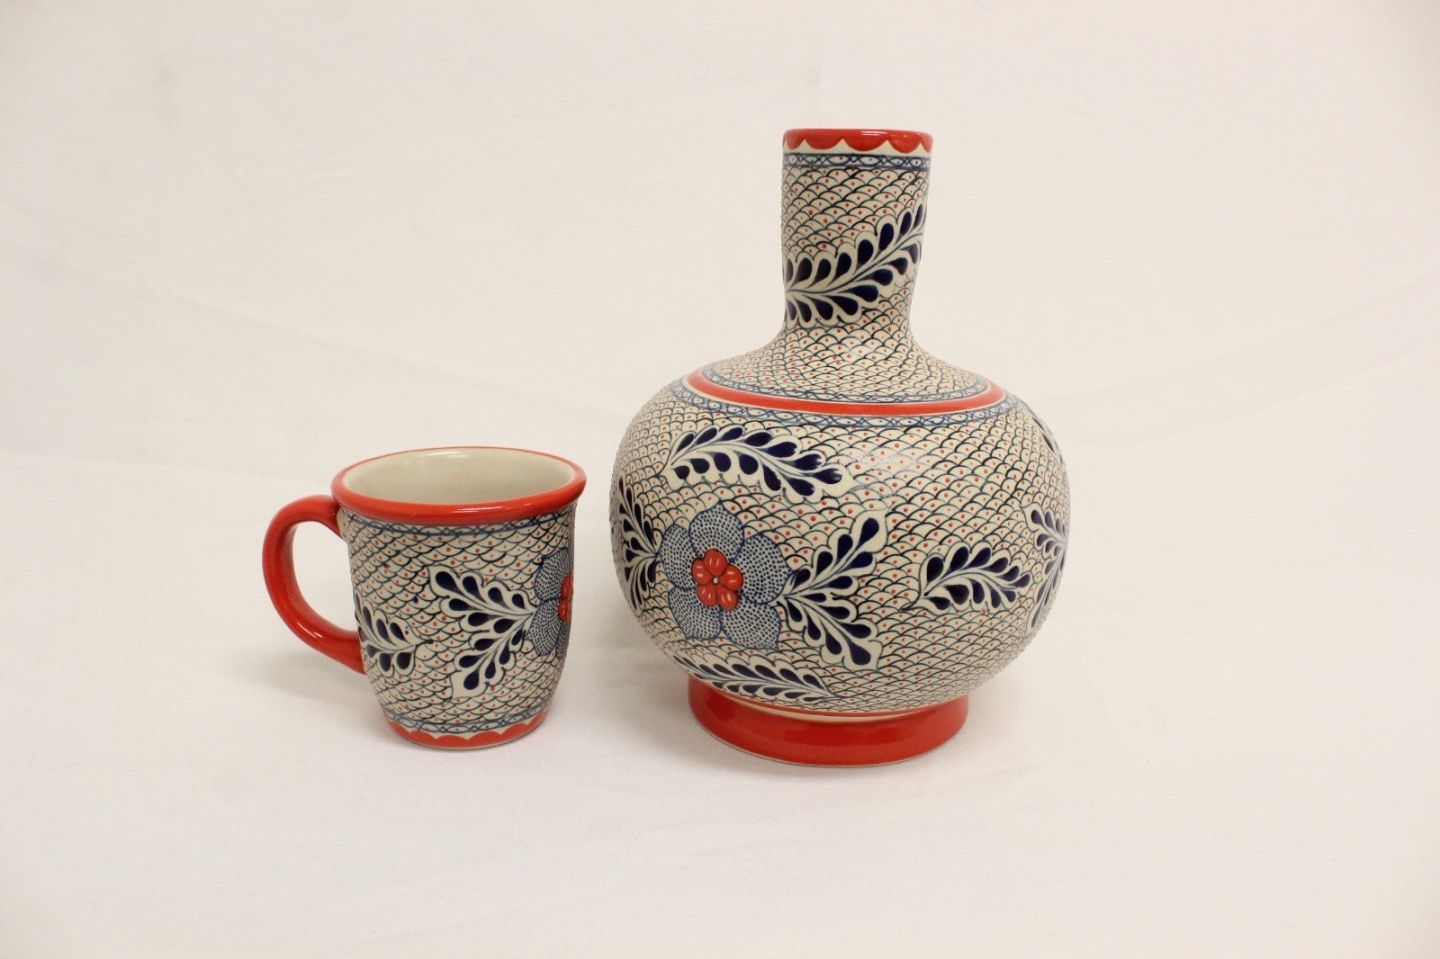 Plasman diseños de cultura 
Mazahua en cerámica mexiquense